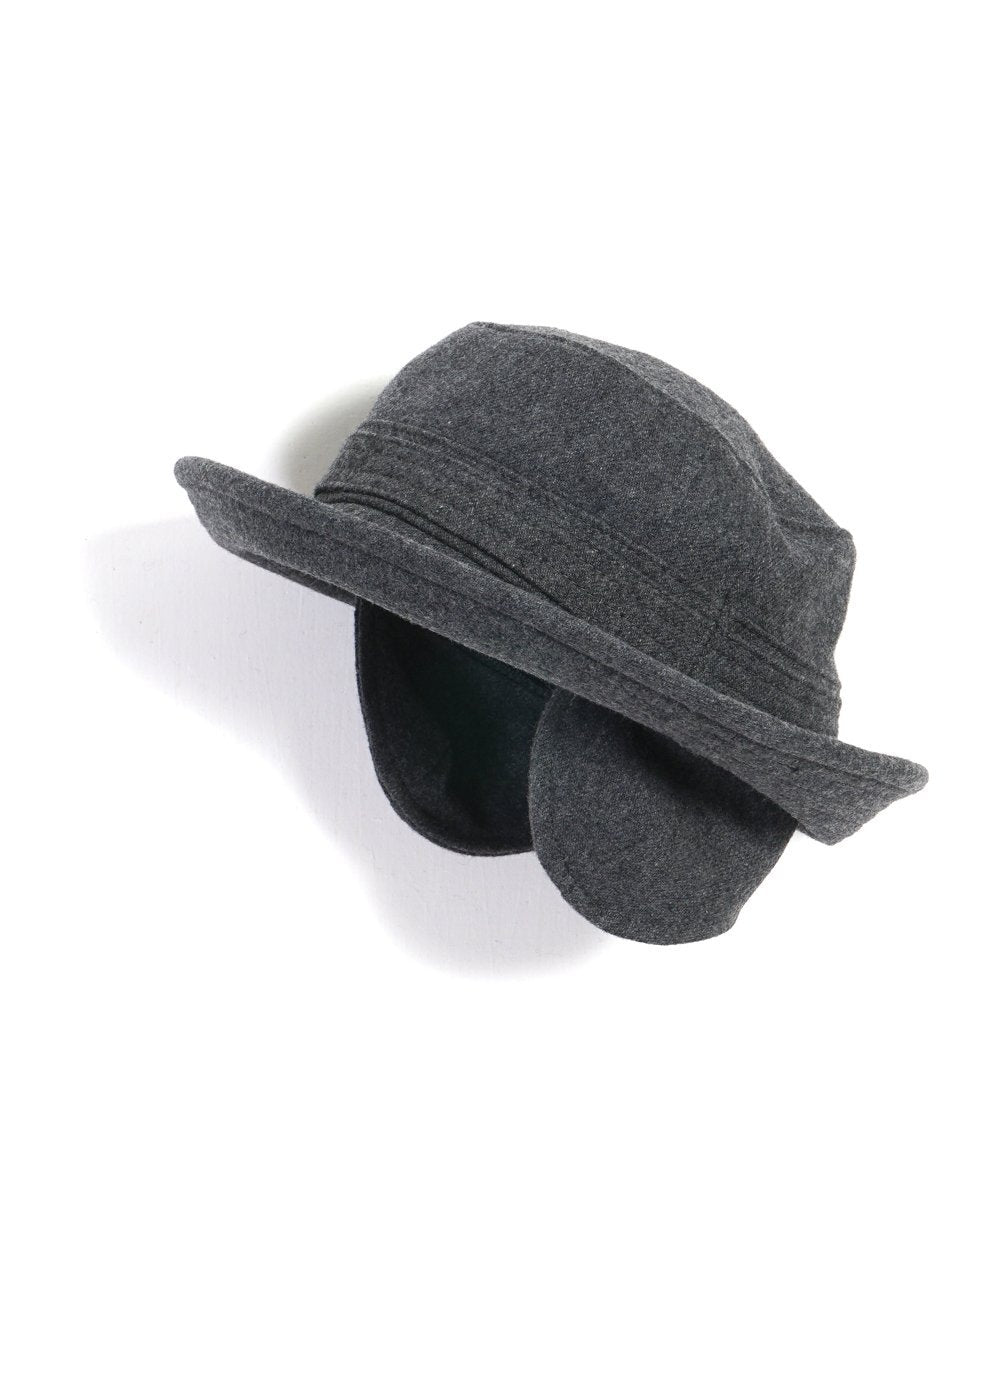 HANSEN Garments - EDVARD | Bucket Hat With Earflaps | Grey Melange - HANSEN Garments